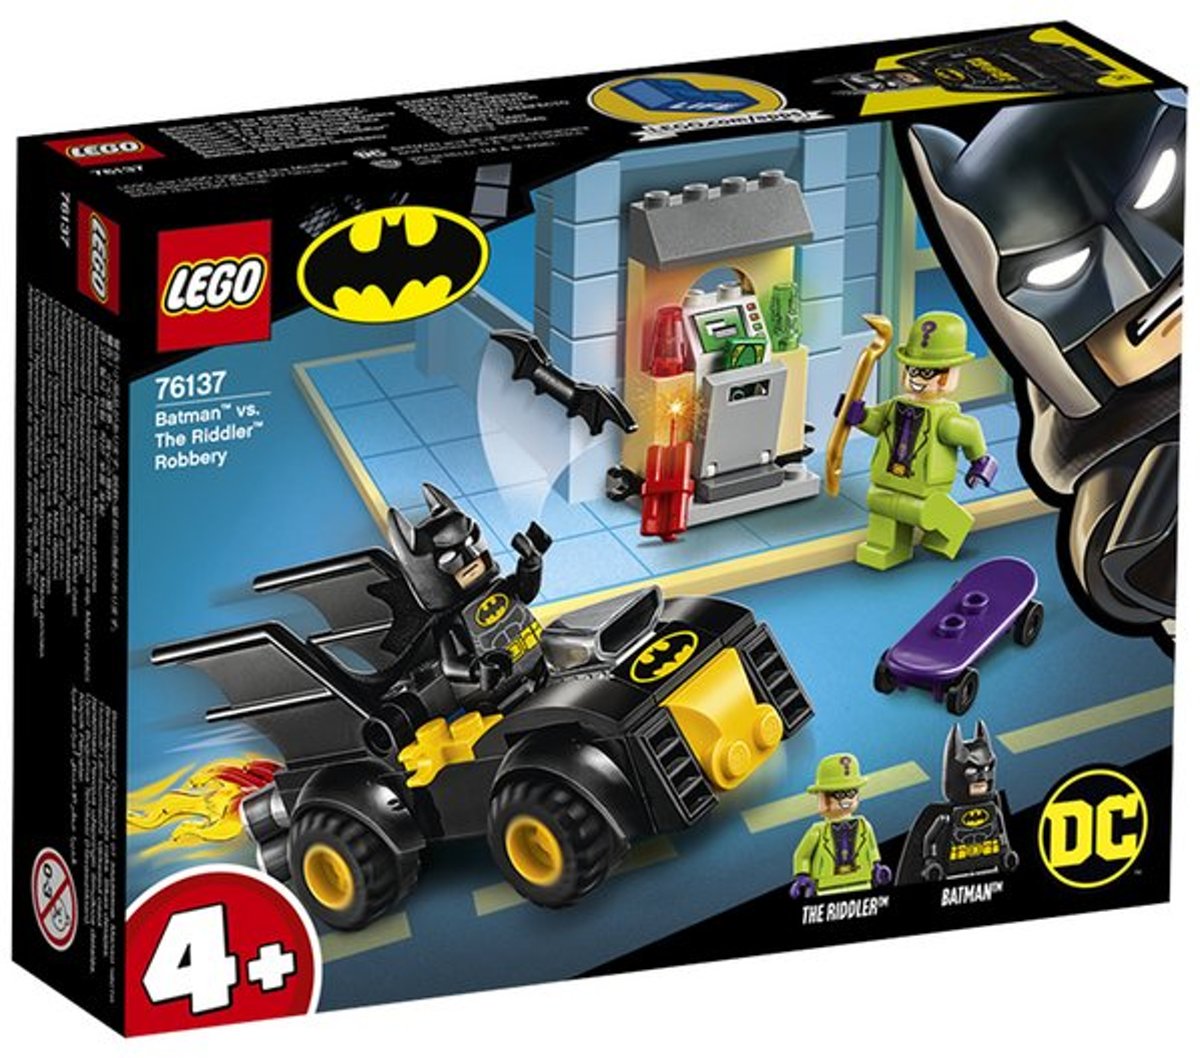 Lego Batman Vs The Riddler Robbery - Speelgoedbazaar.nl